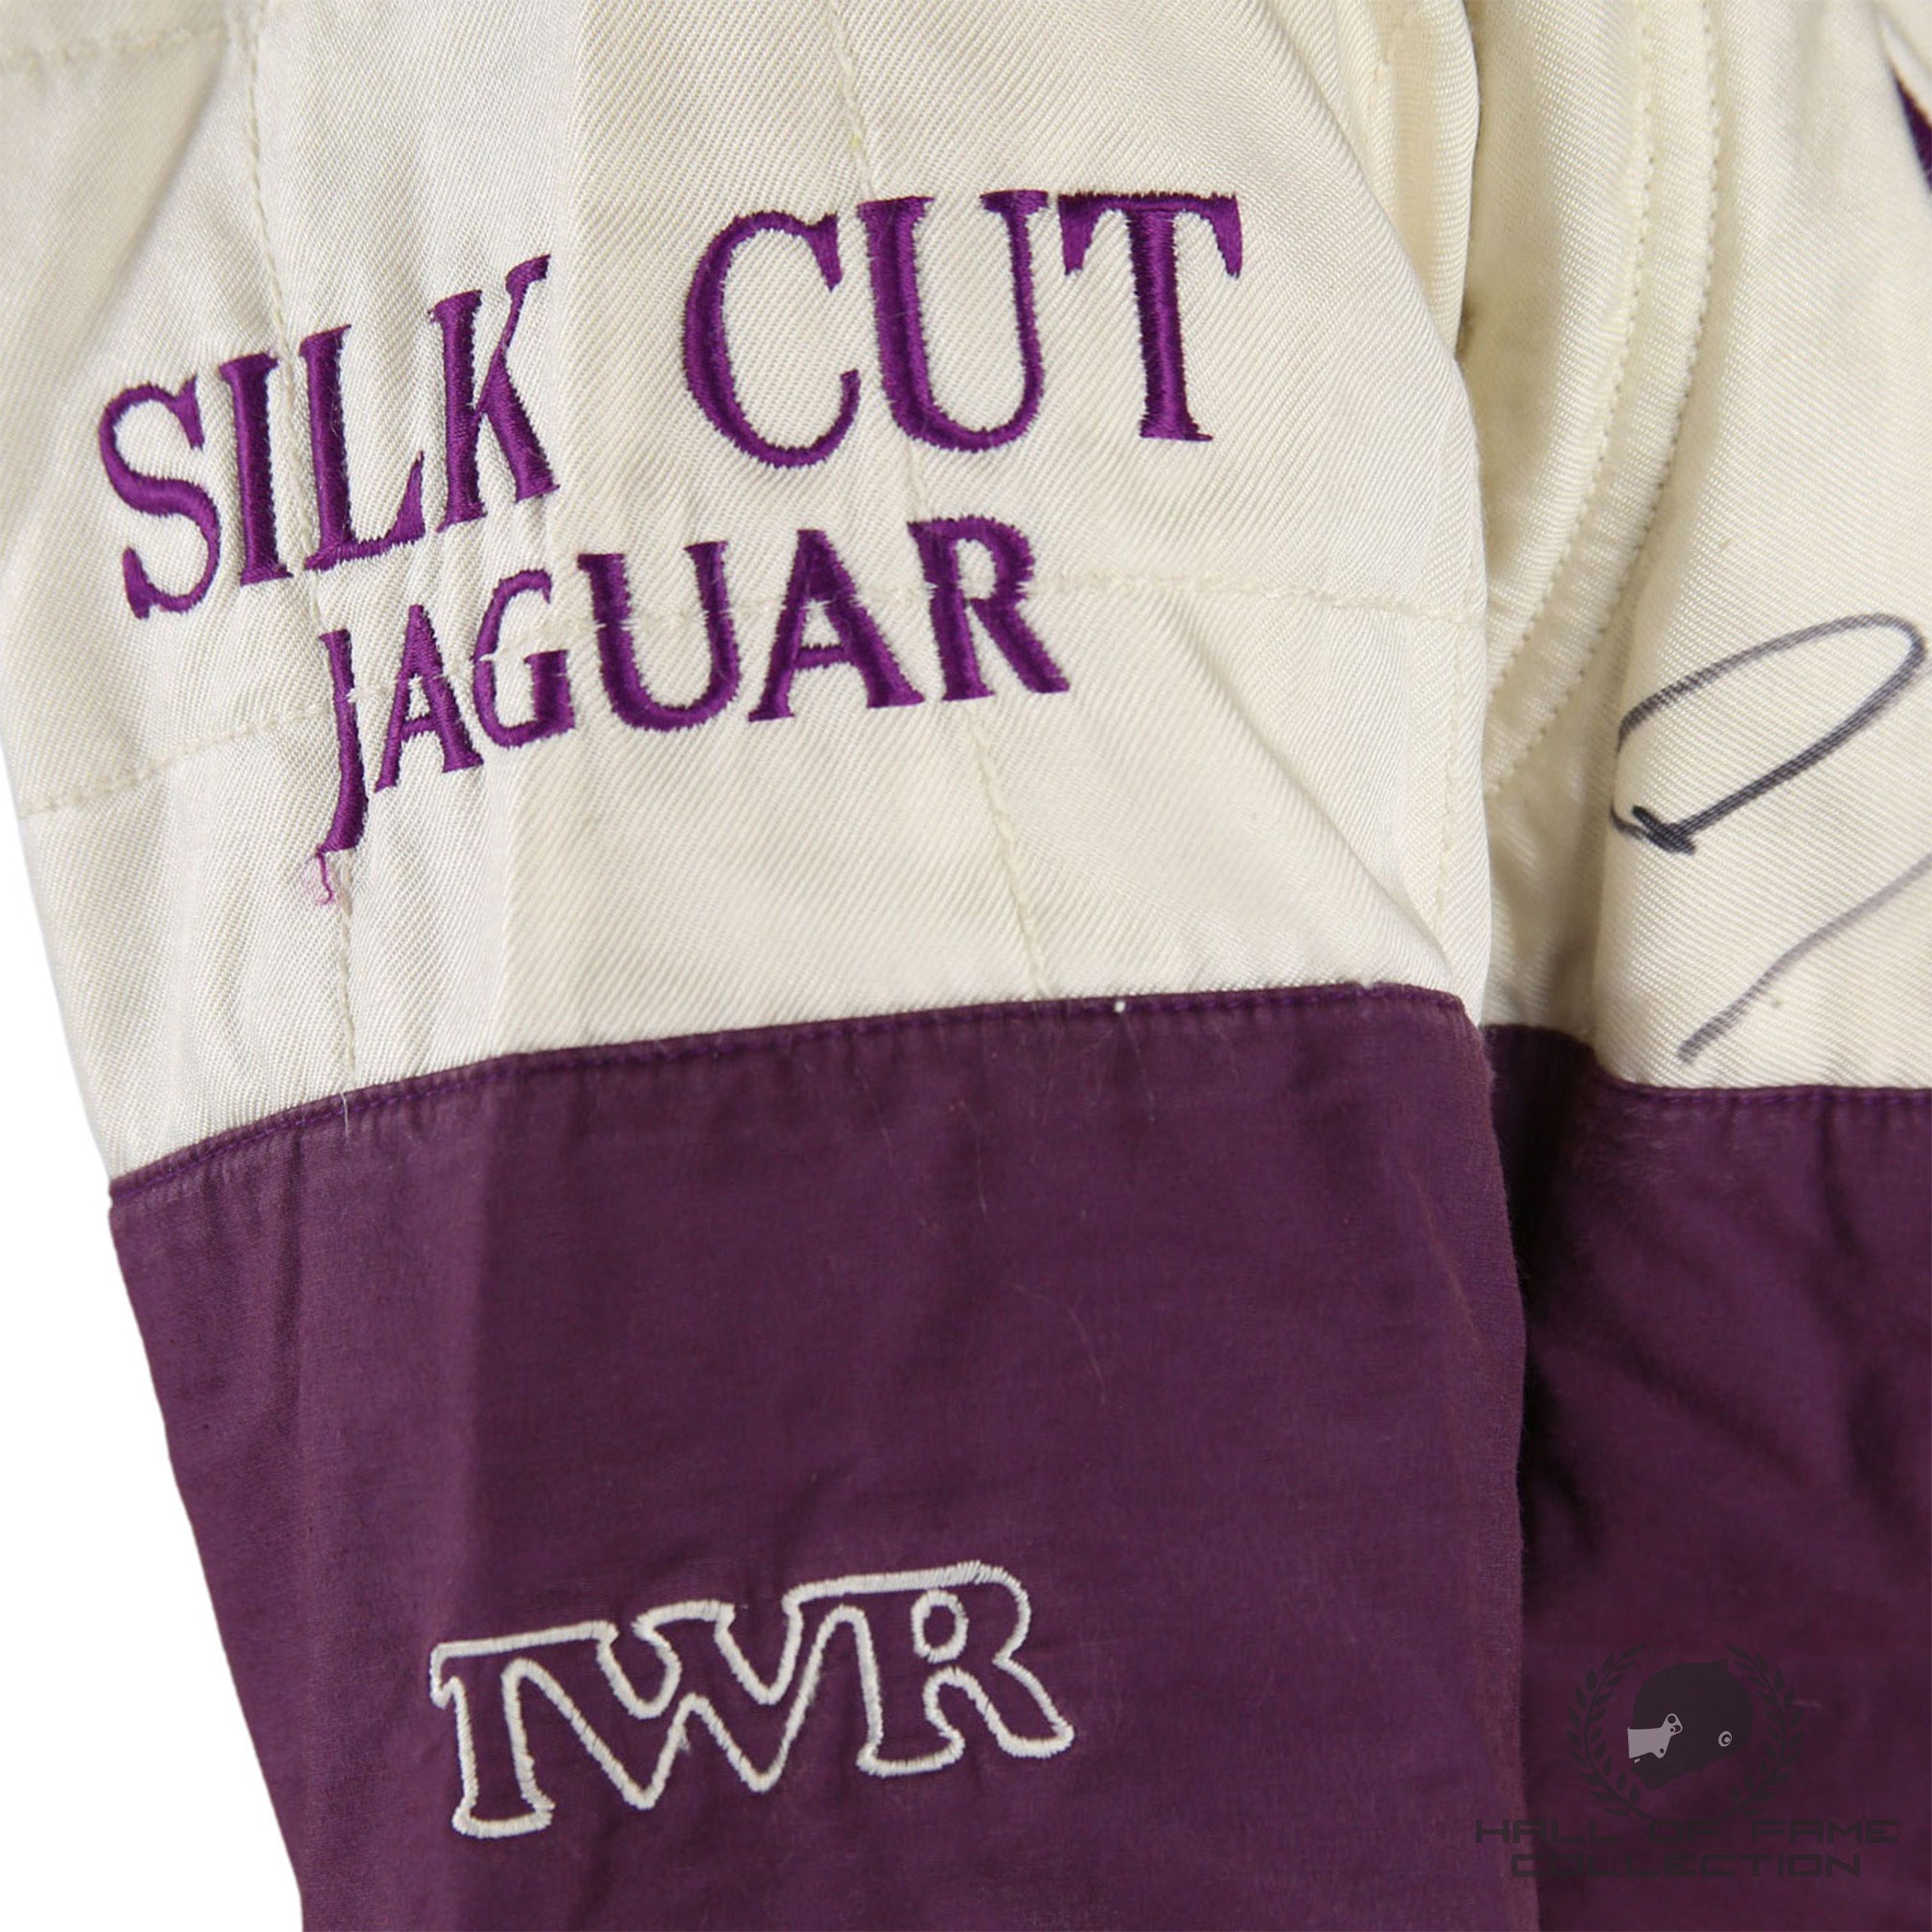 1988 Derek Daly Signed 24 Hrs of Le Mans Race Used Silk Cut Jaguar Sportscar Suit, Helmet + More